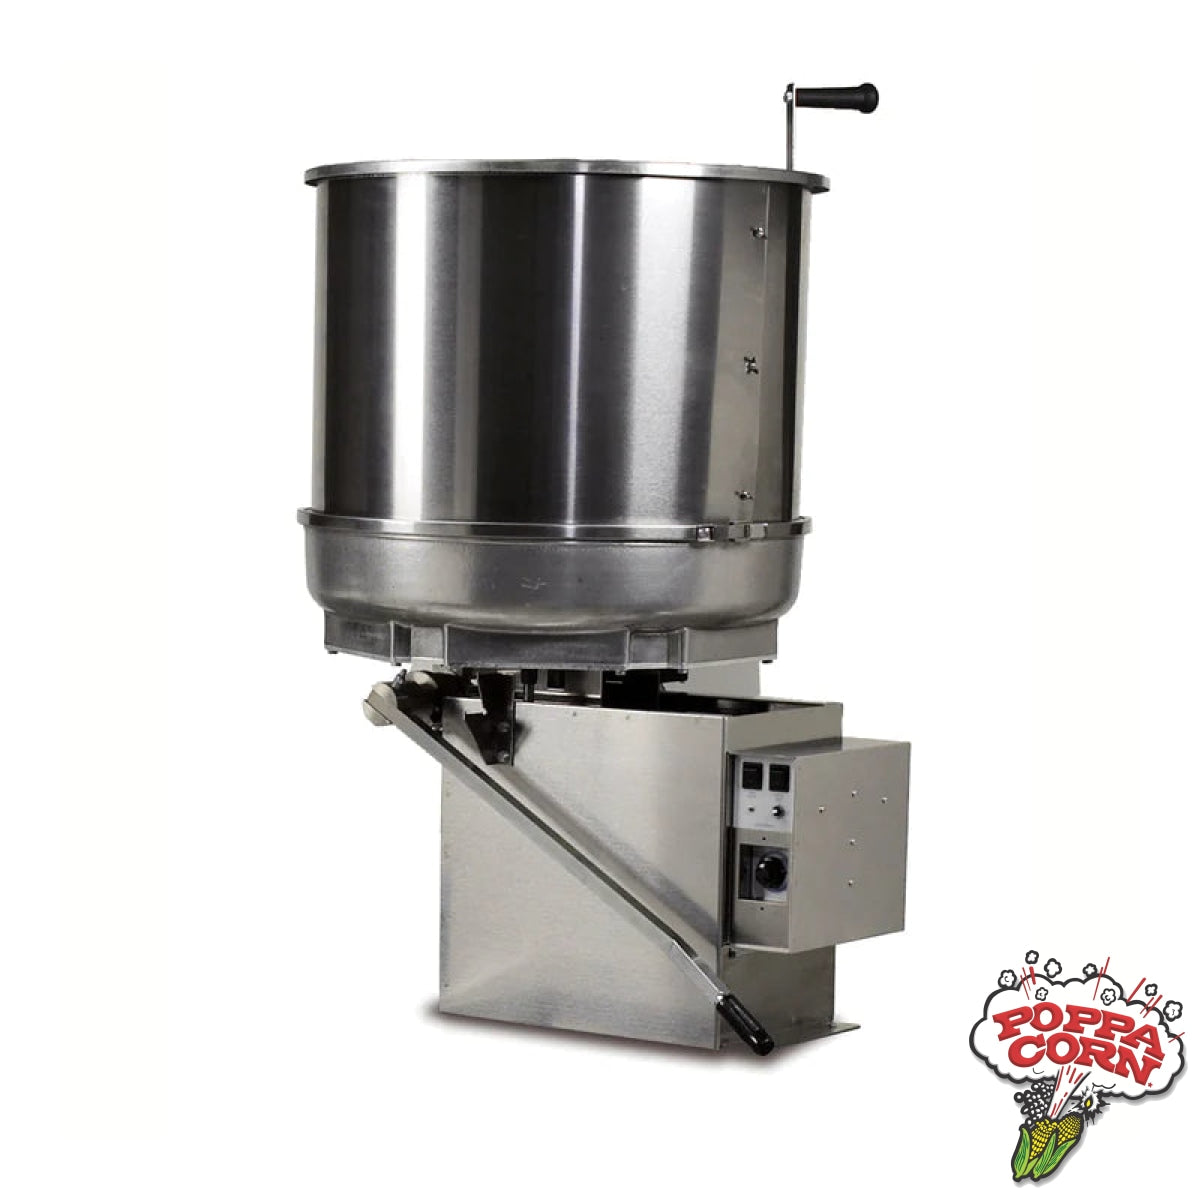 Mark 20 Karmel King Cooker Mixer (LH dump)- GM2621 - Poppa Corn Corp